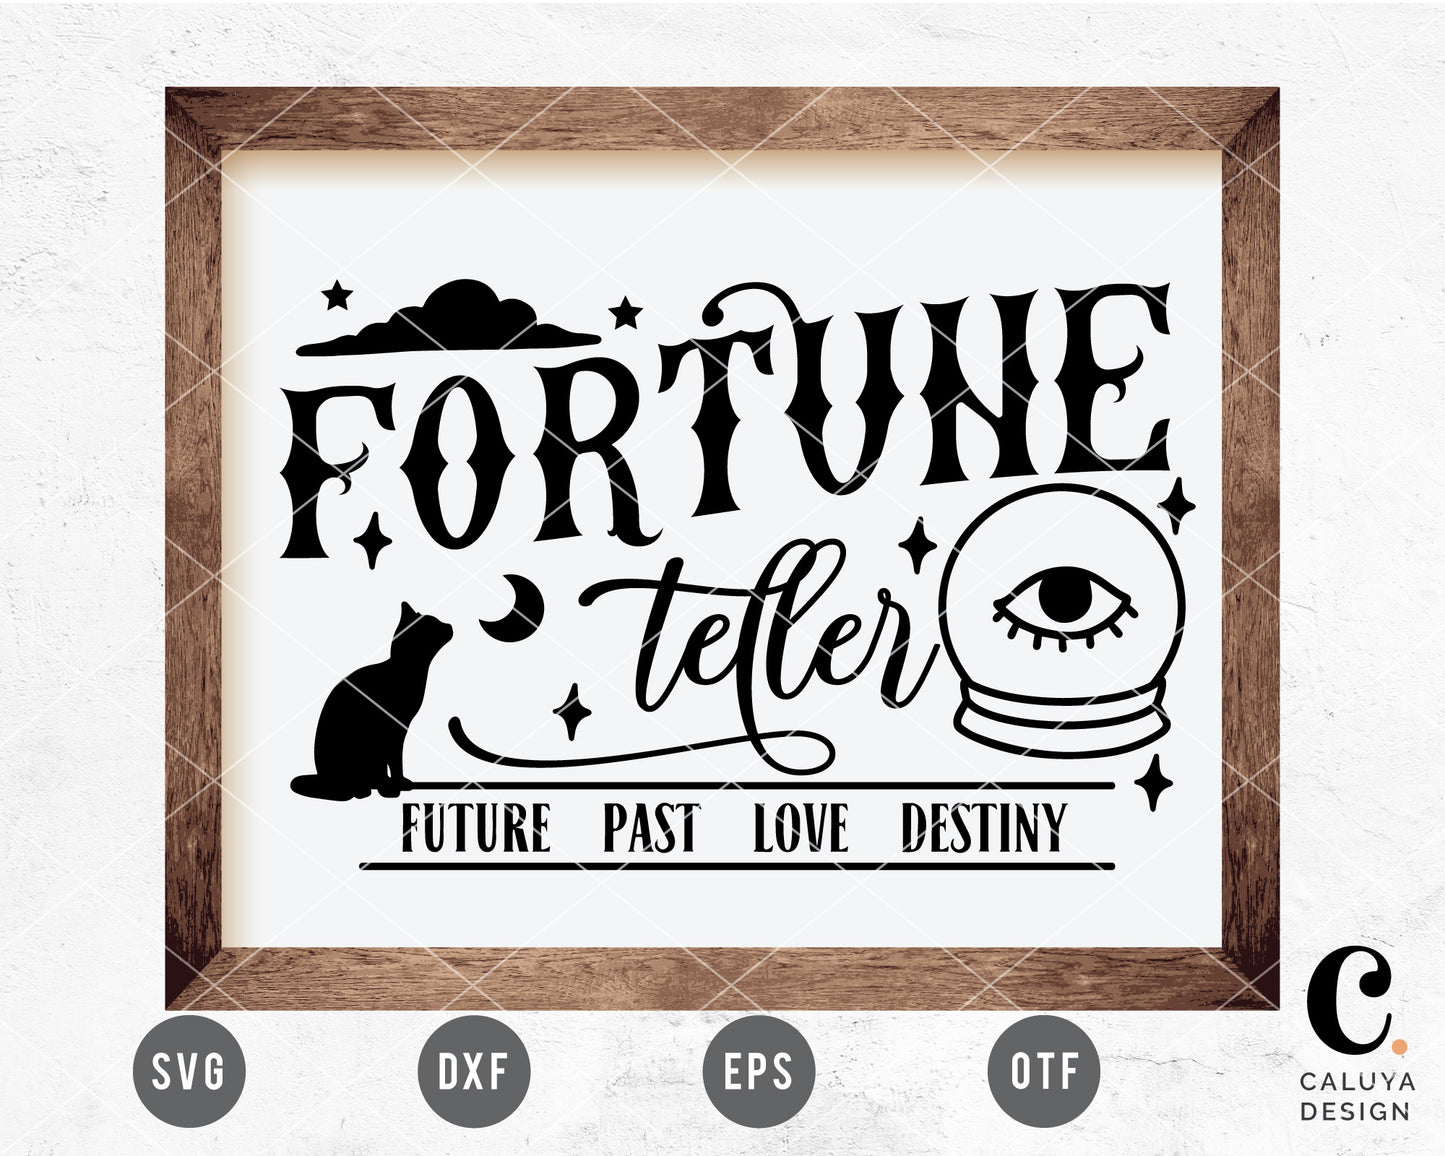 Fortune Teller Halloween Sign SVG